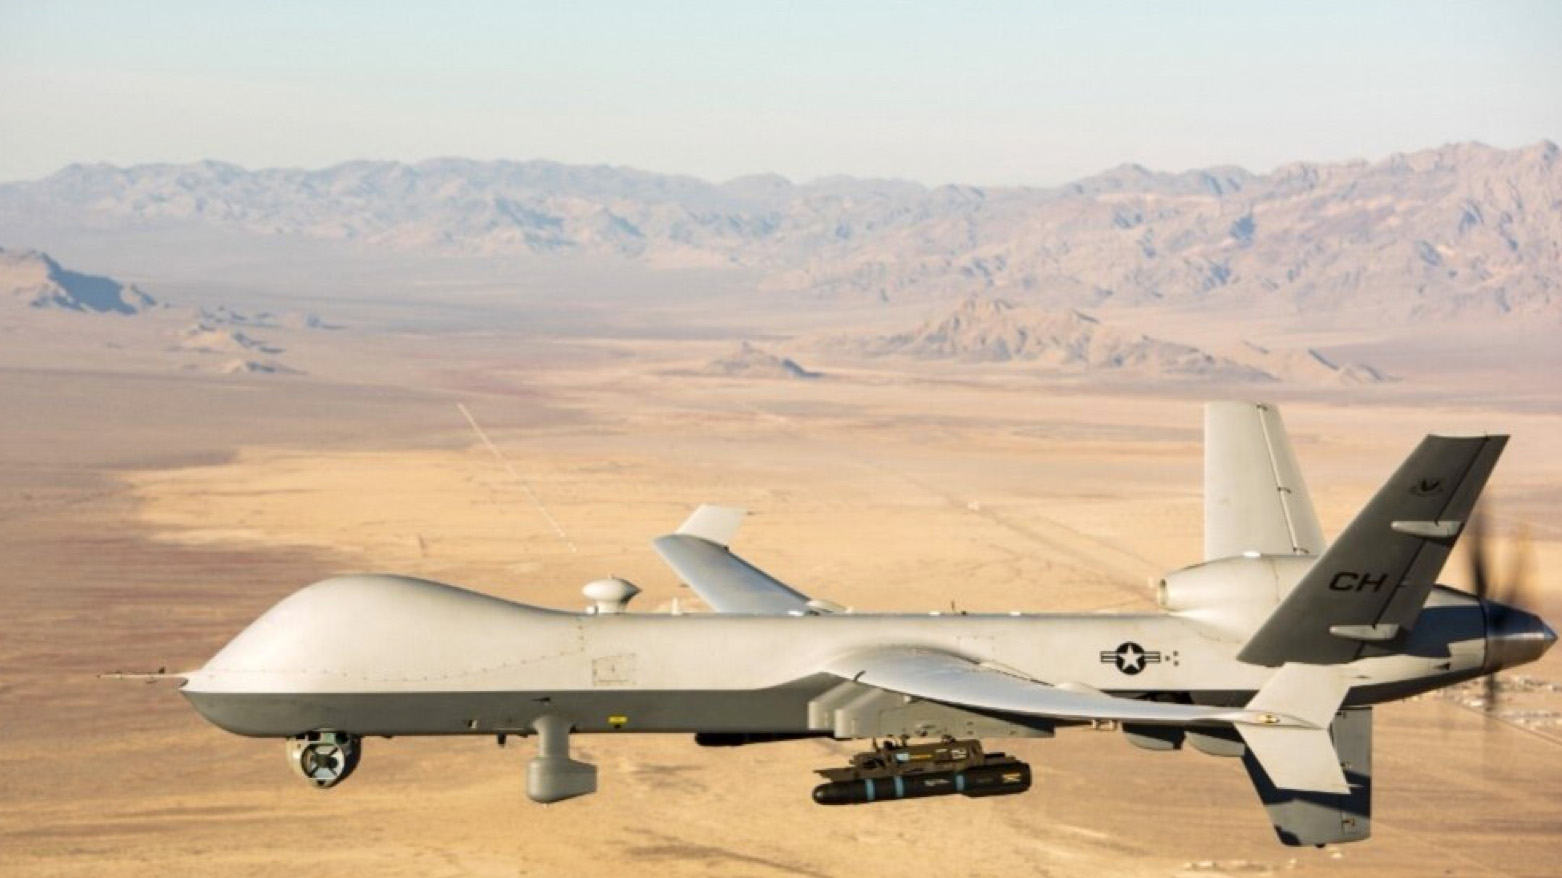 Pentagon official confirms US drone crashed near Diyala